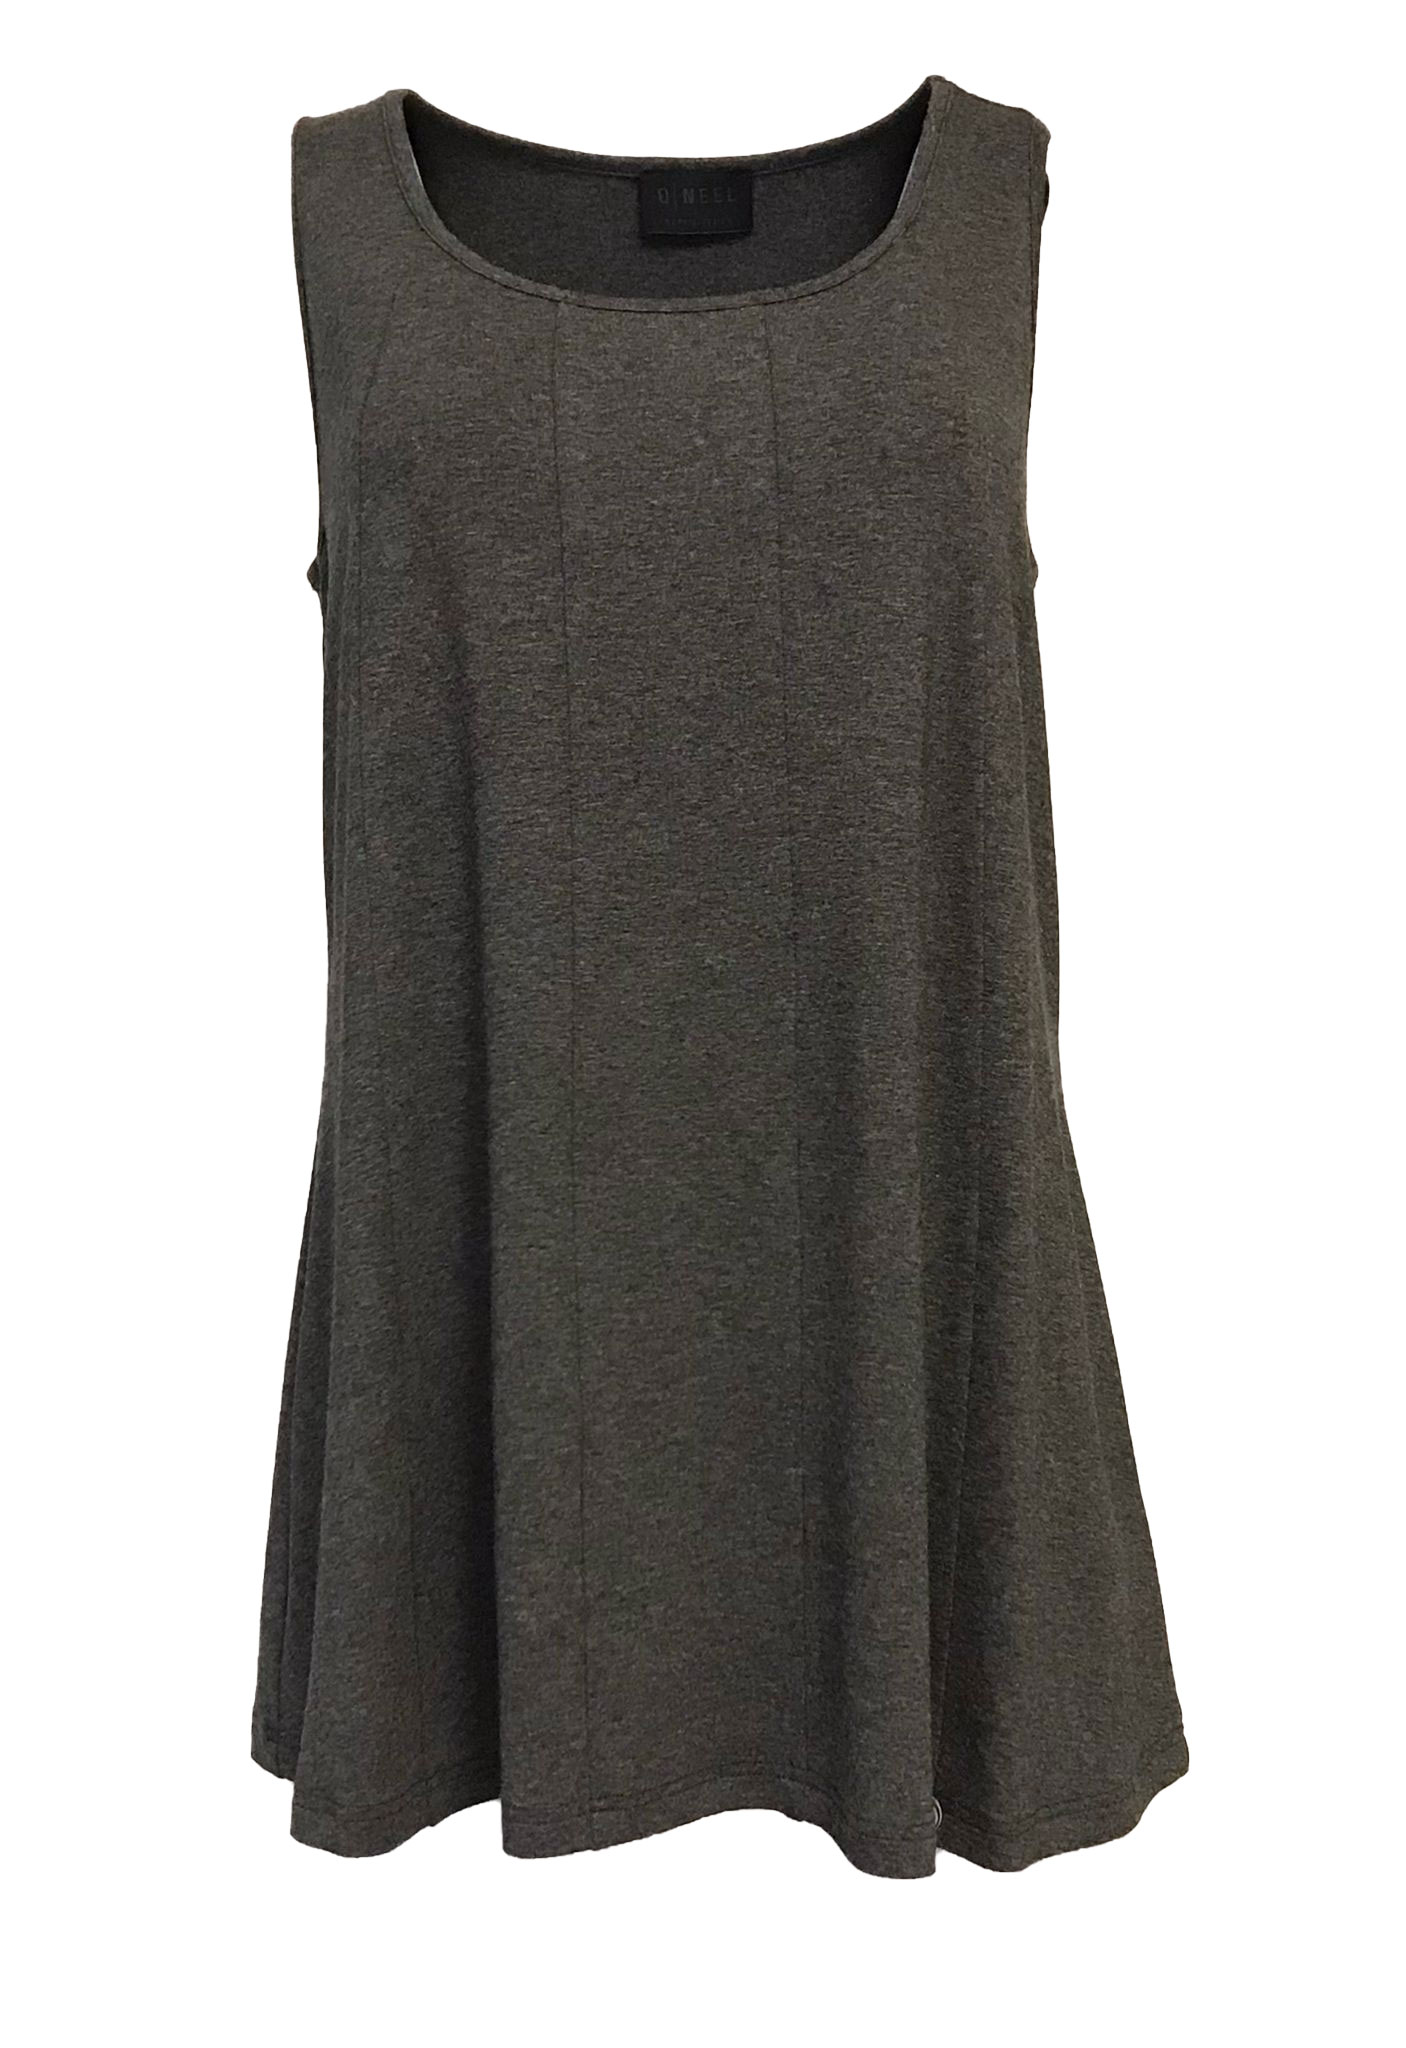 Charcoal Grey A-shape Line Vest By QNEEL - Stuff Fashion London